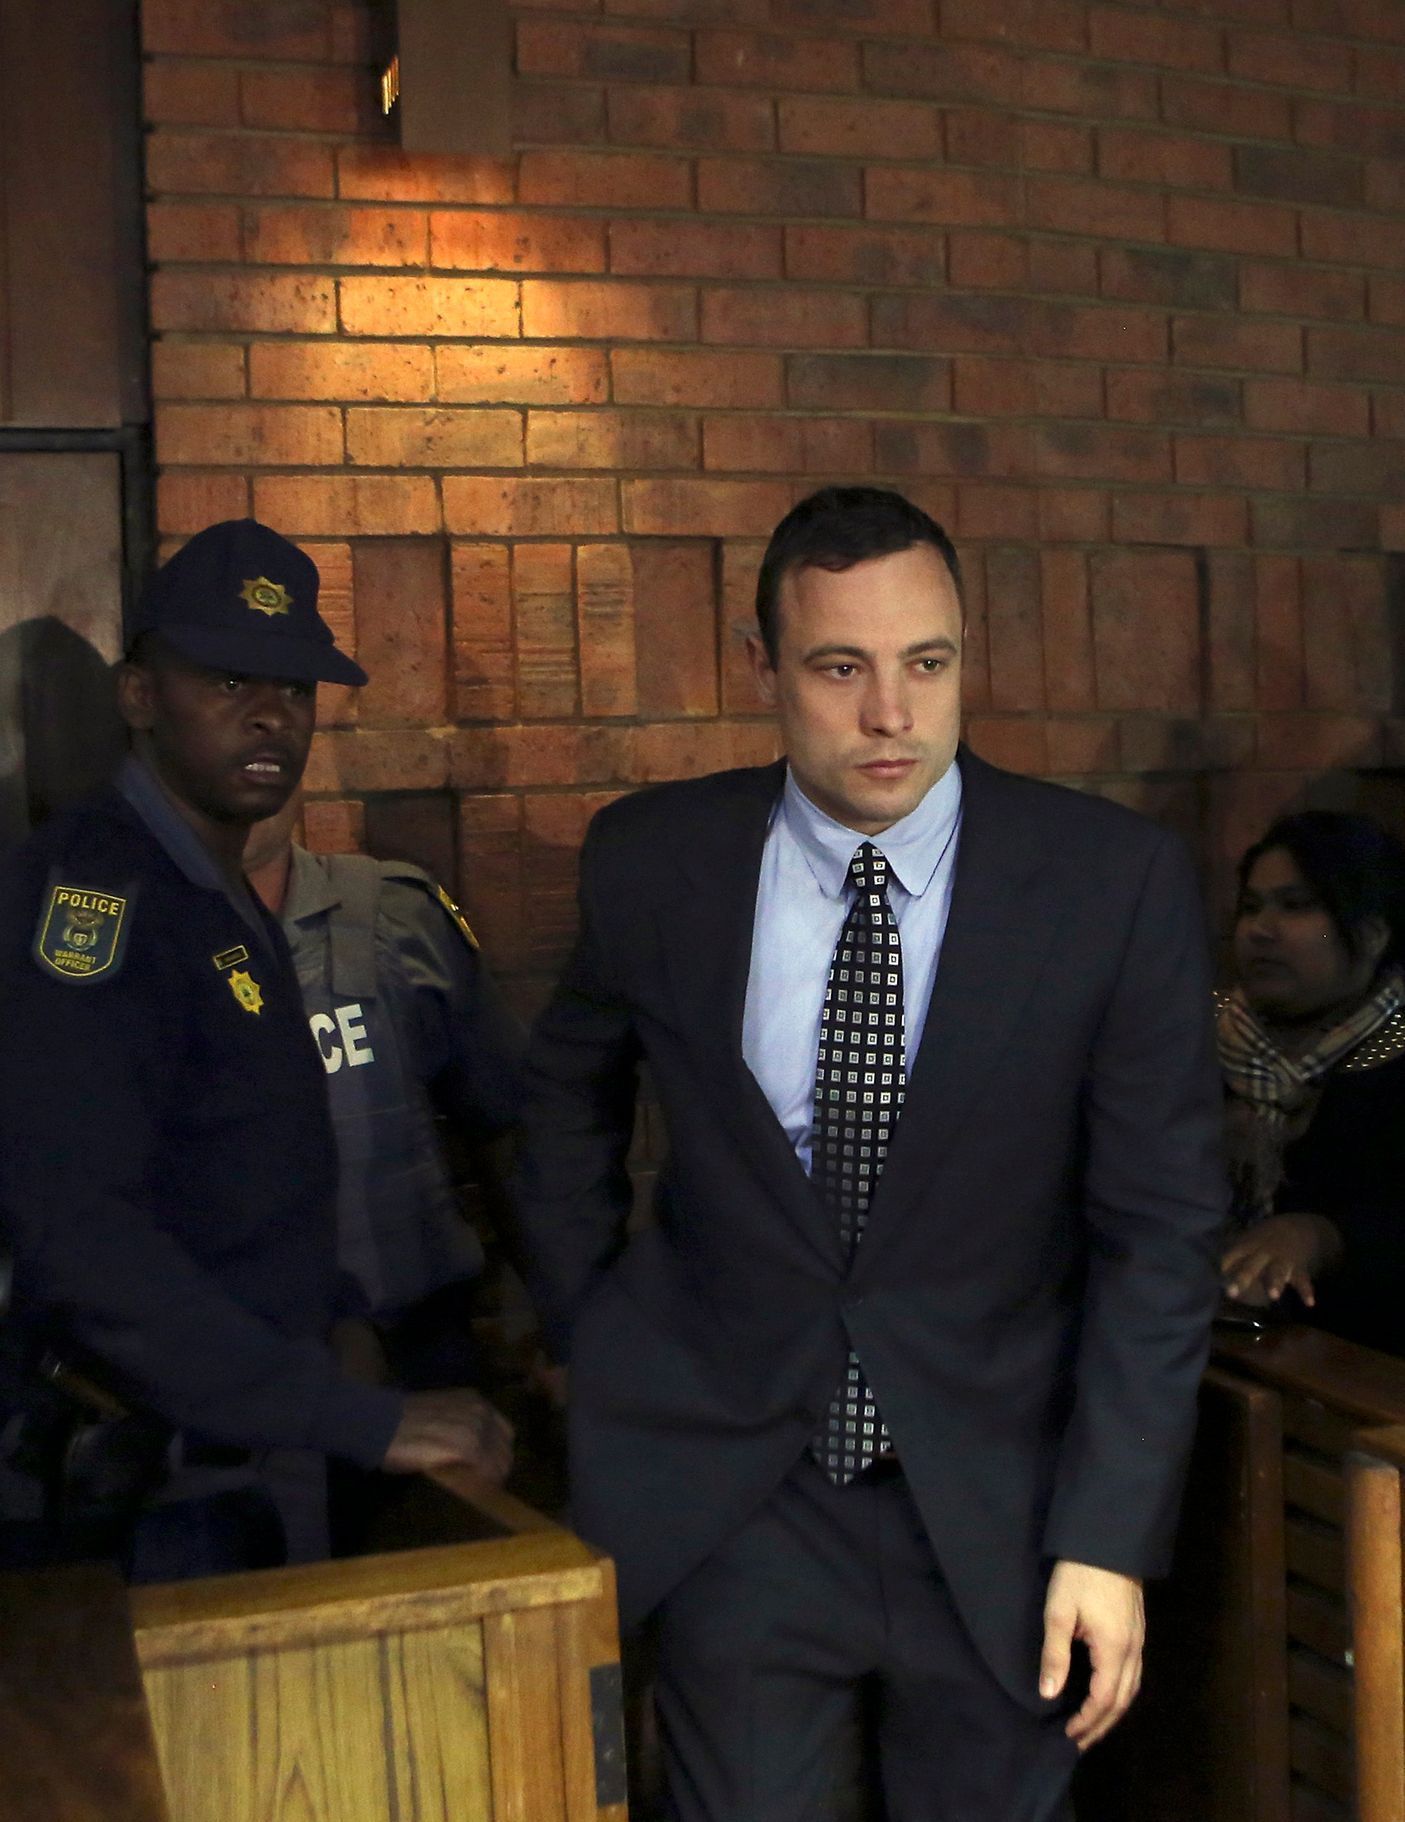 Oscar Pistorius u soudu v Pretorii (2013)